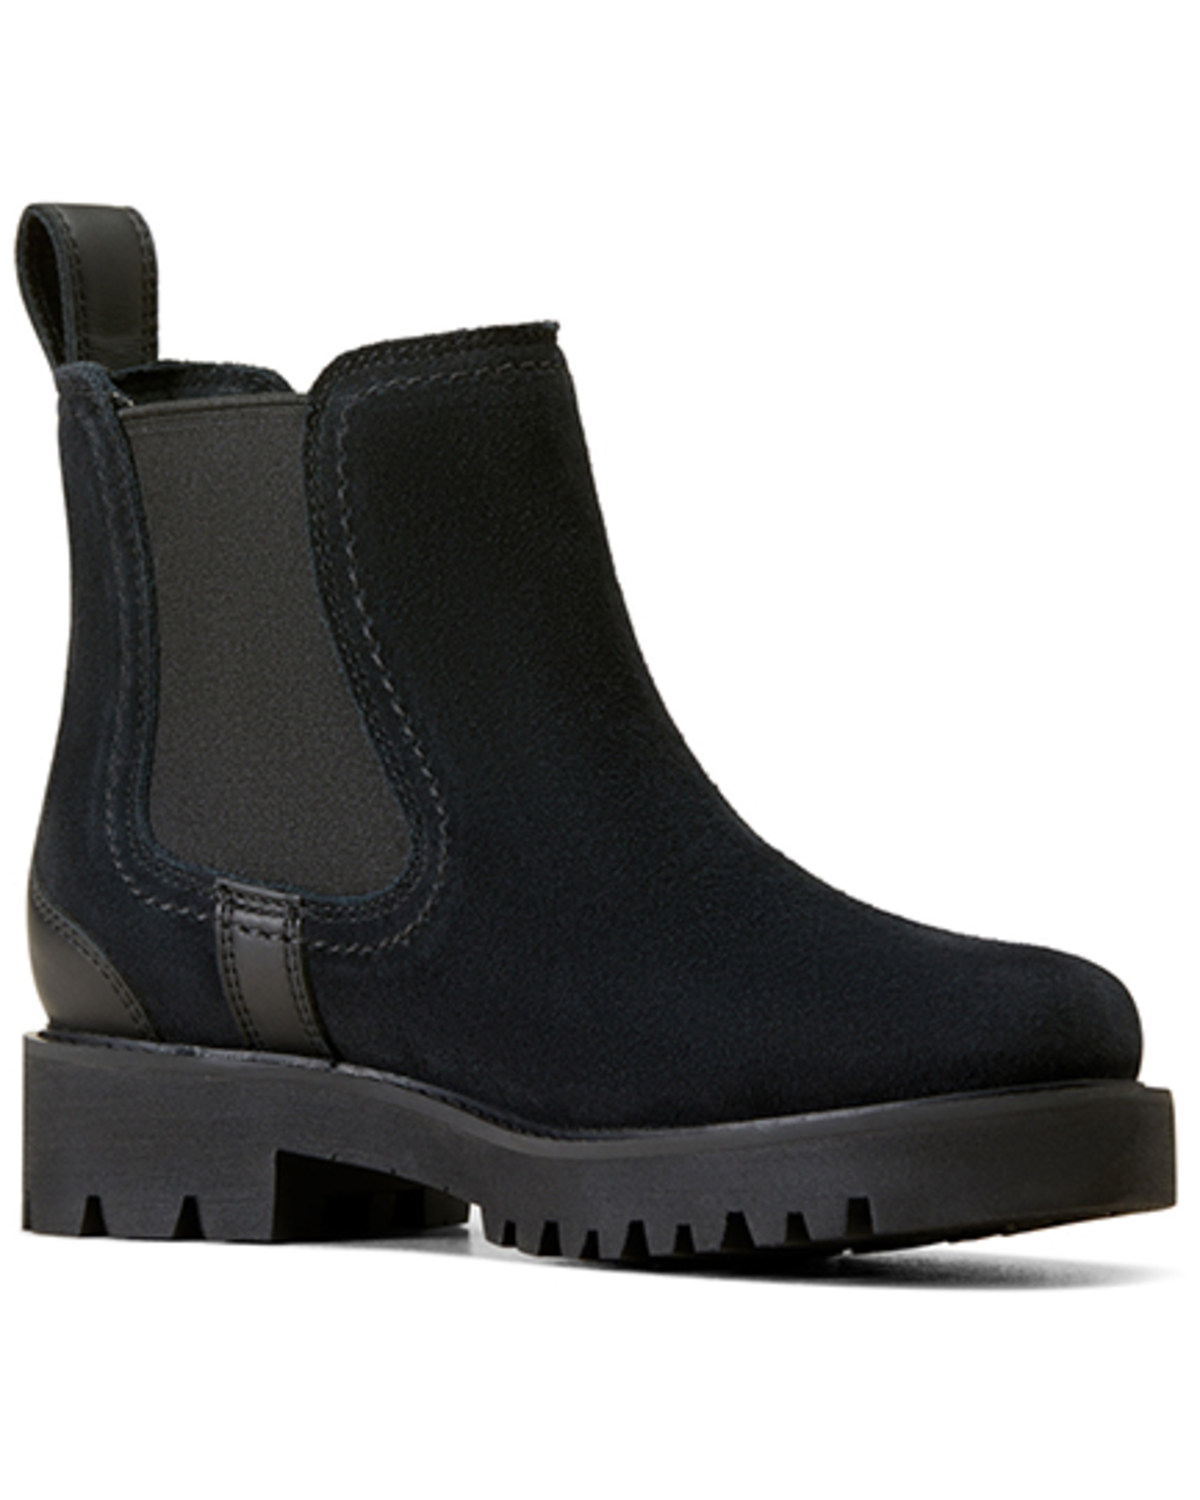 Ariat Women's Wexford Lug Waterproof Chelsea Boots